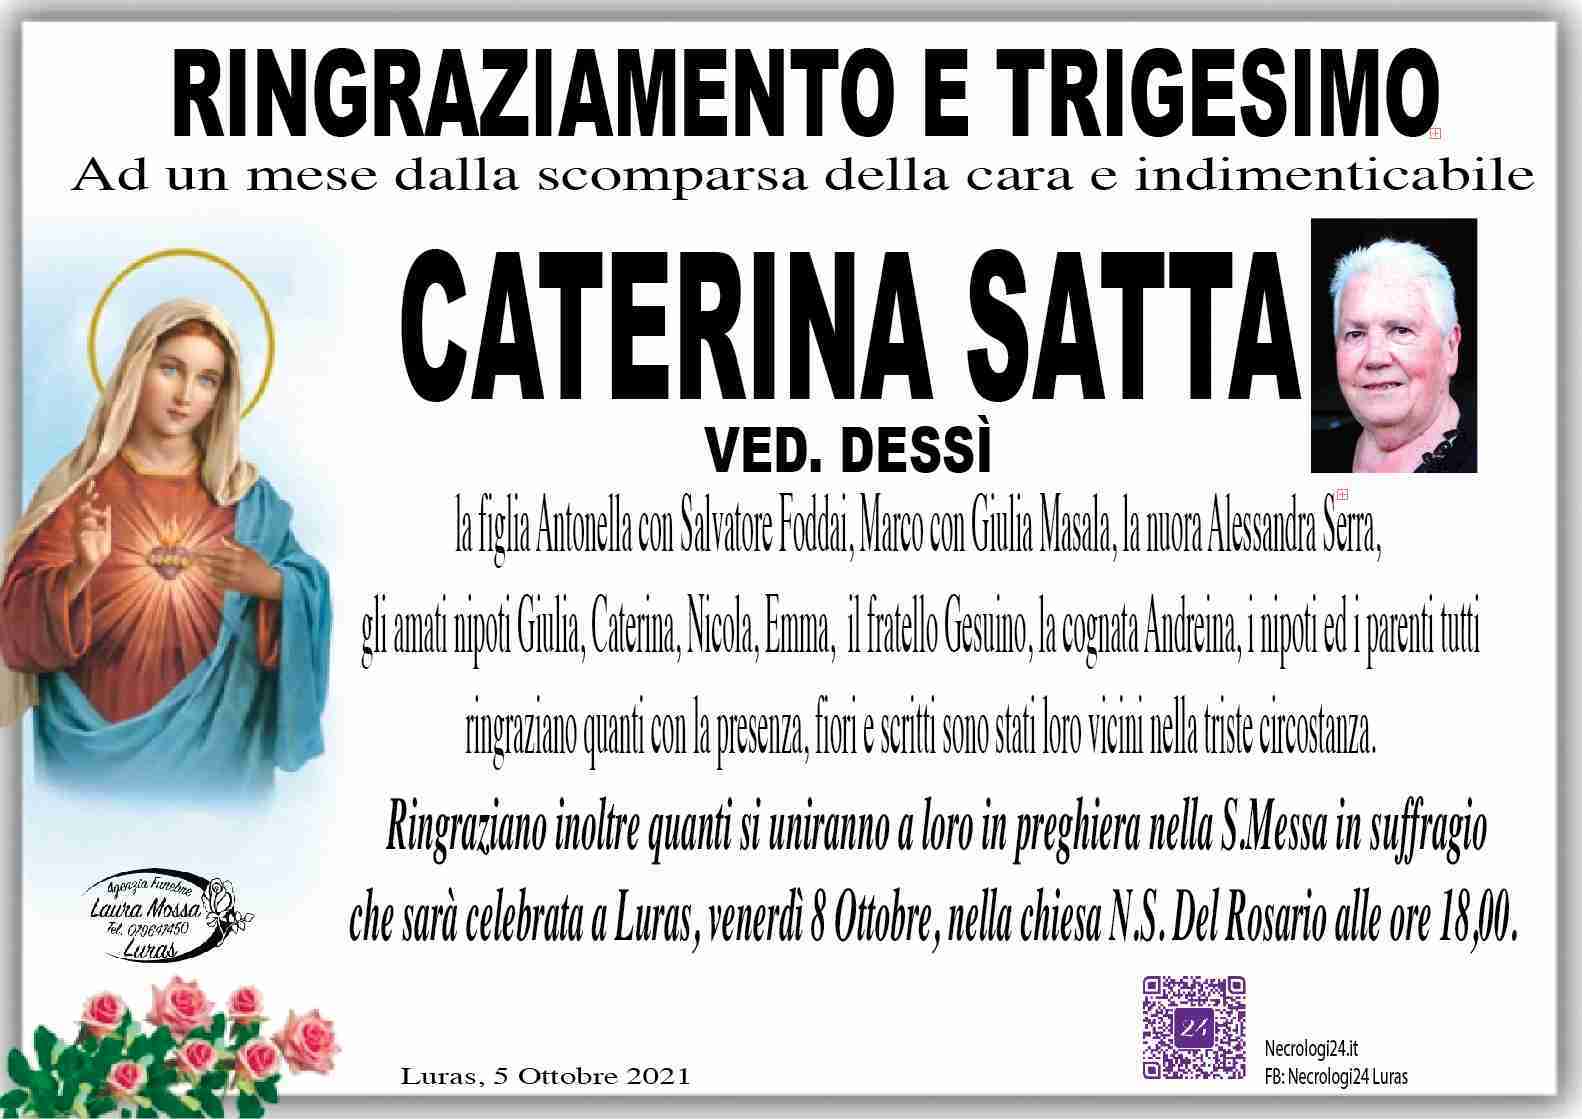 Caterina Satta